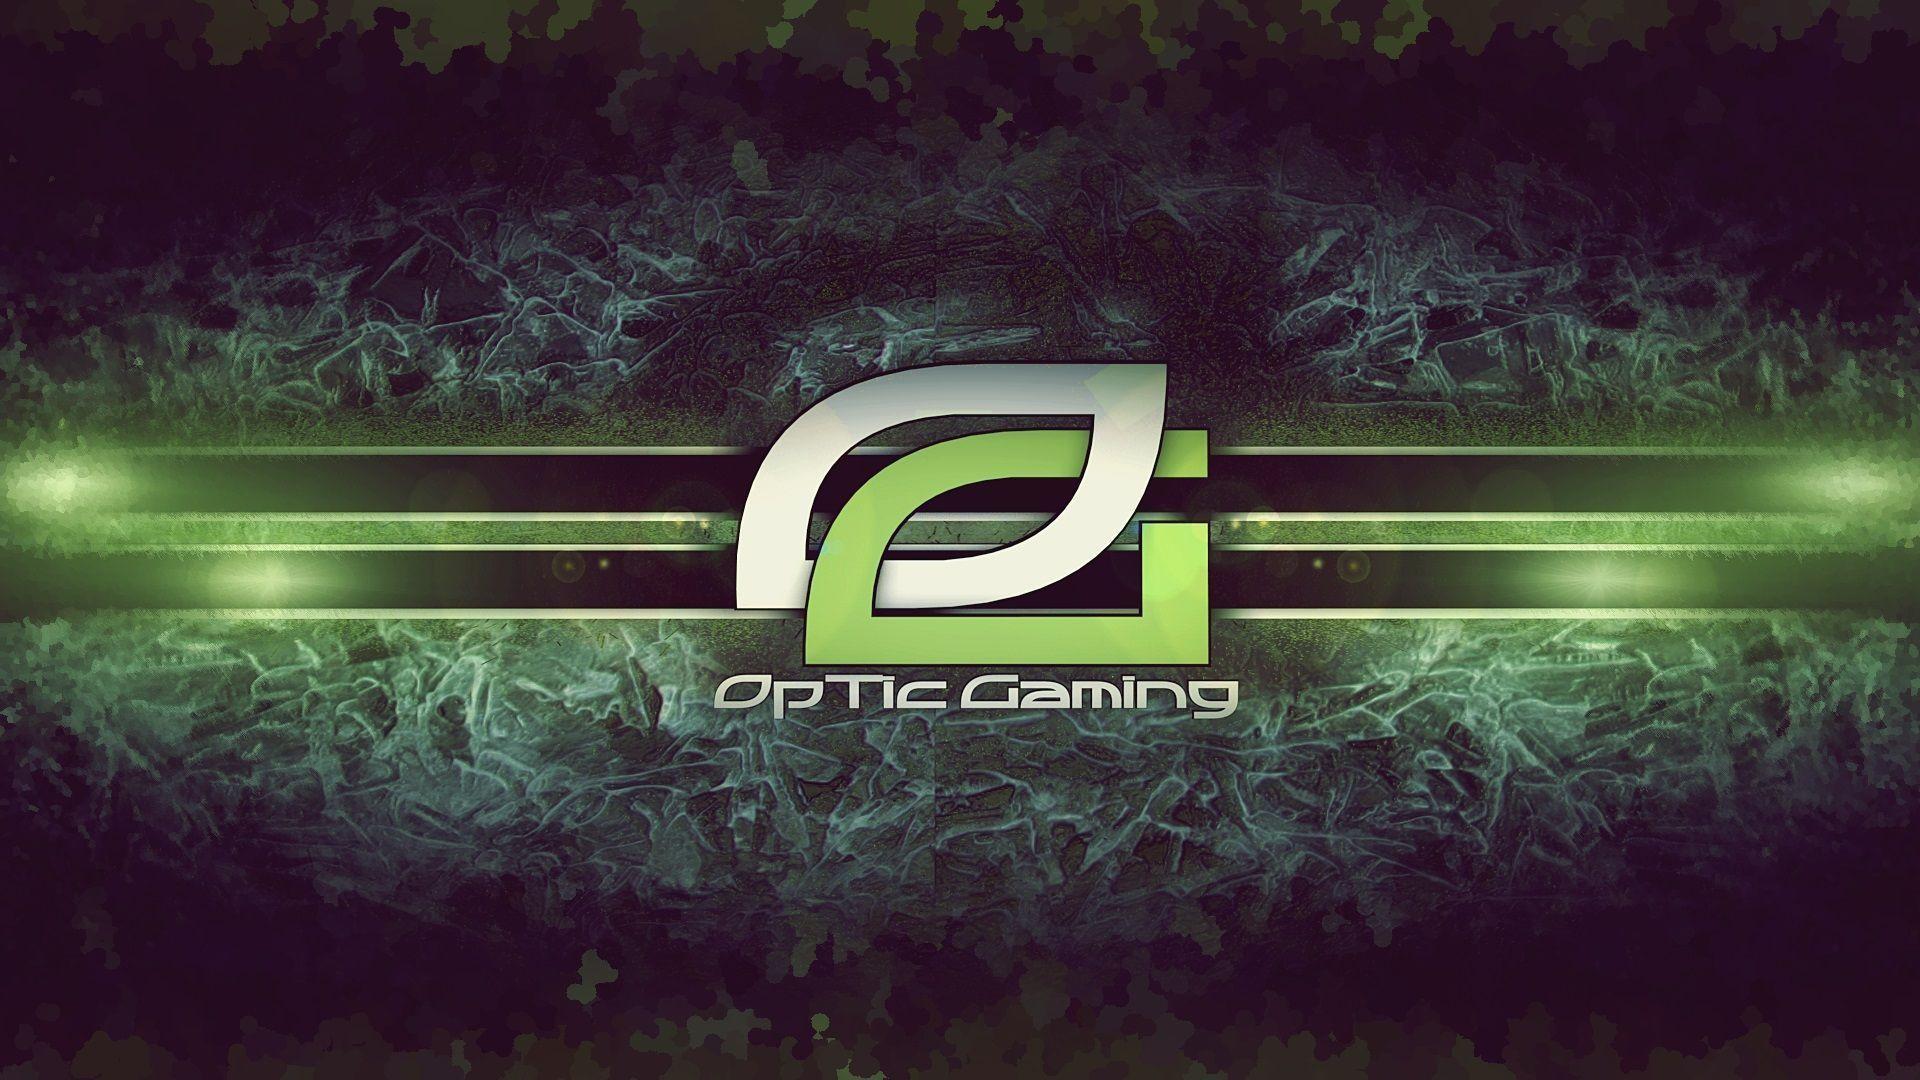 optic gaming logo black background